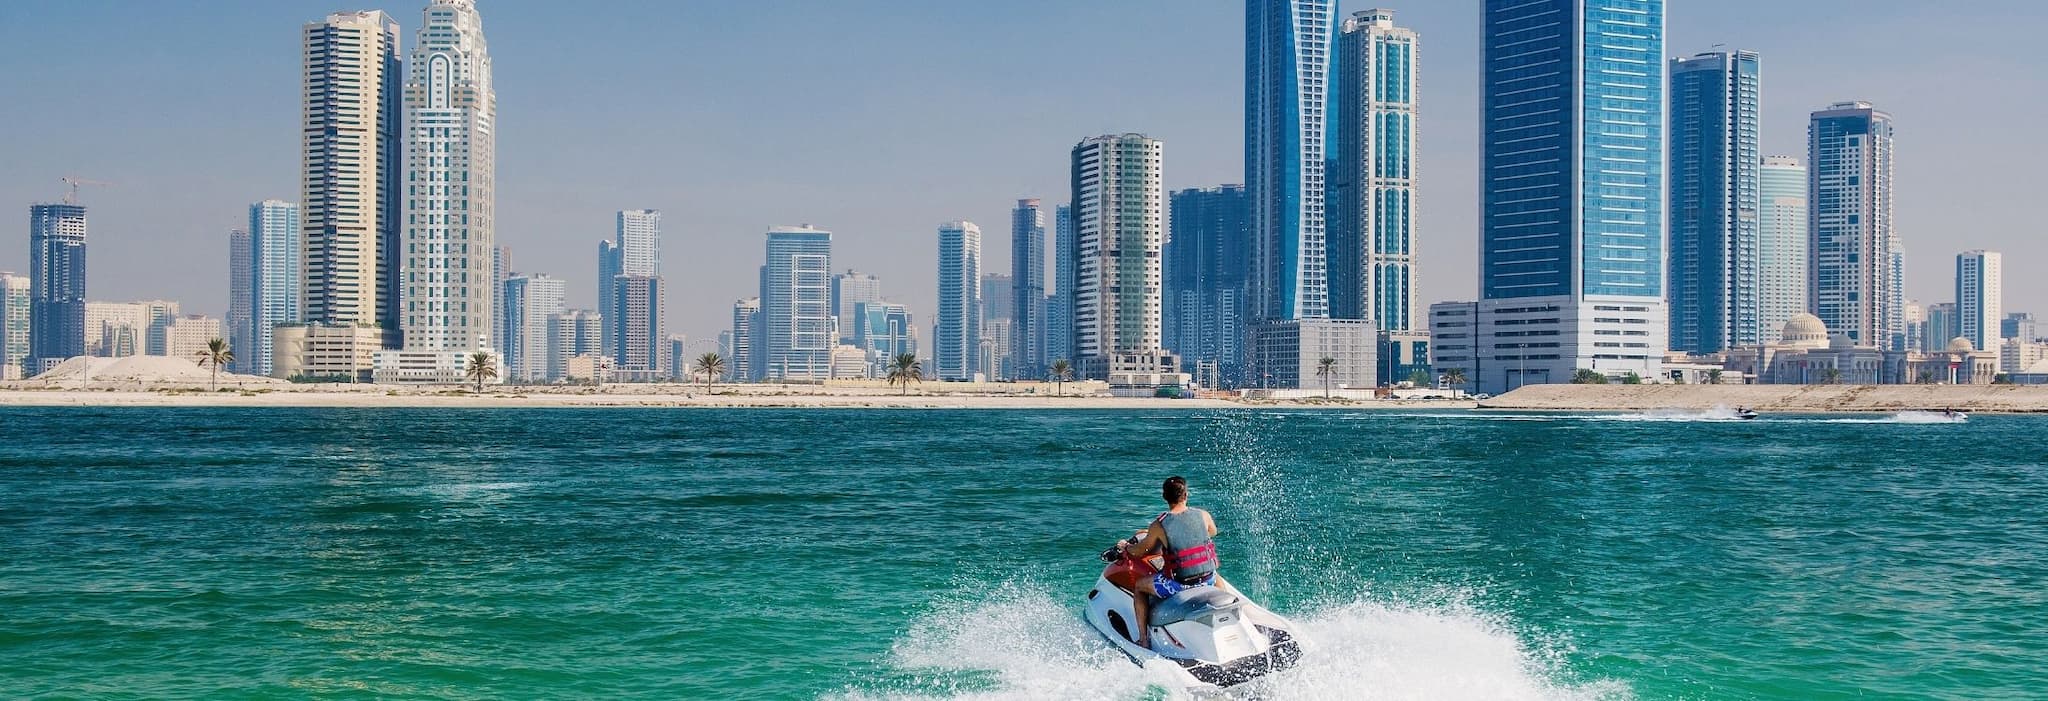 Top 5 entertaining things to do in Dubai 